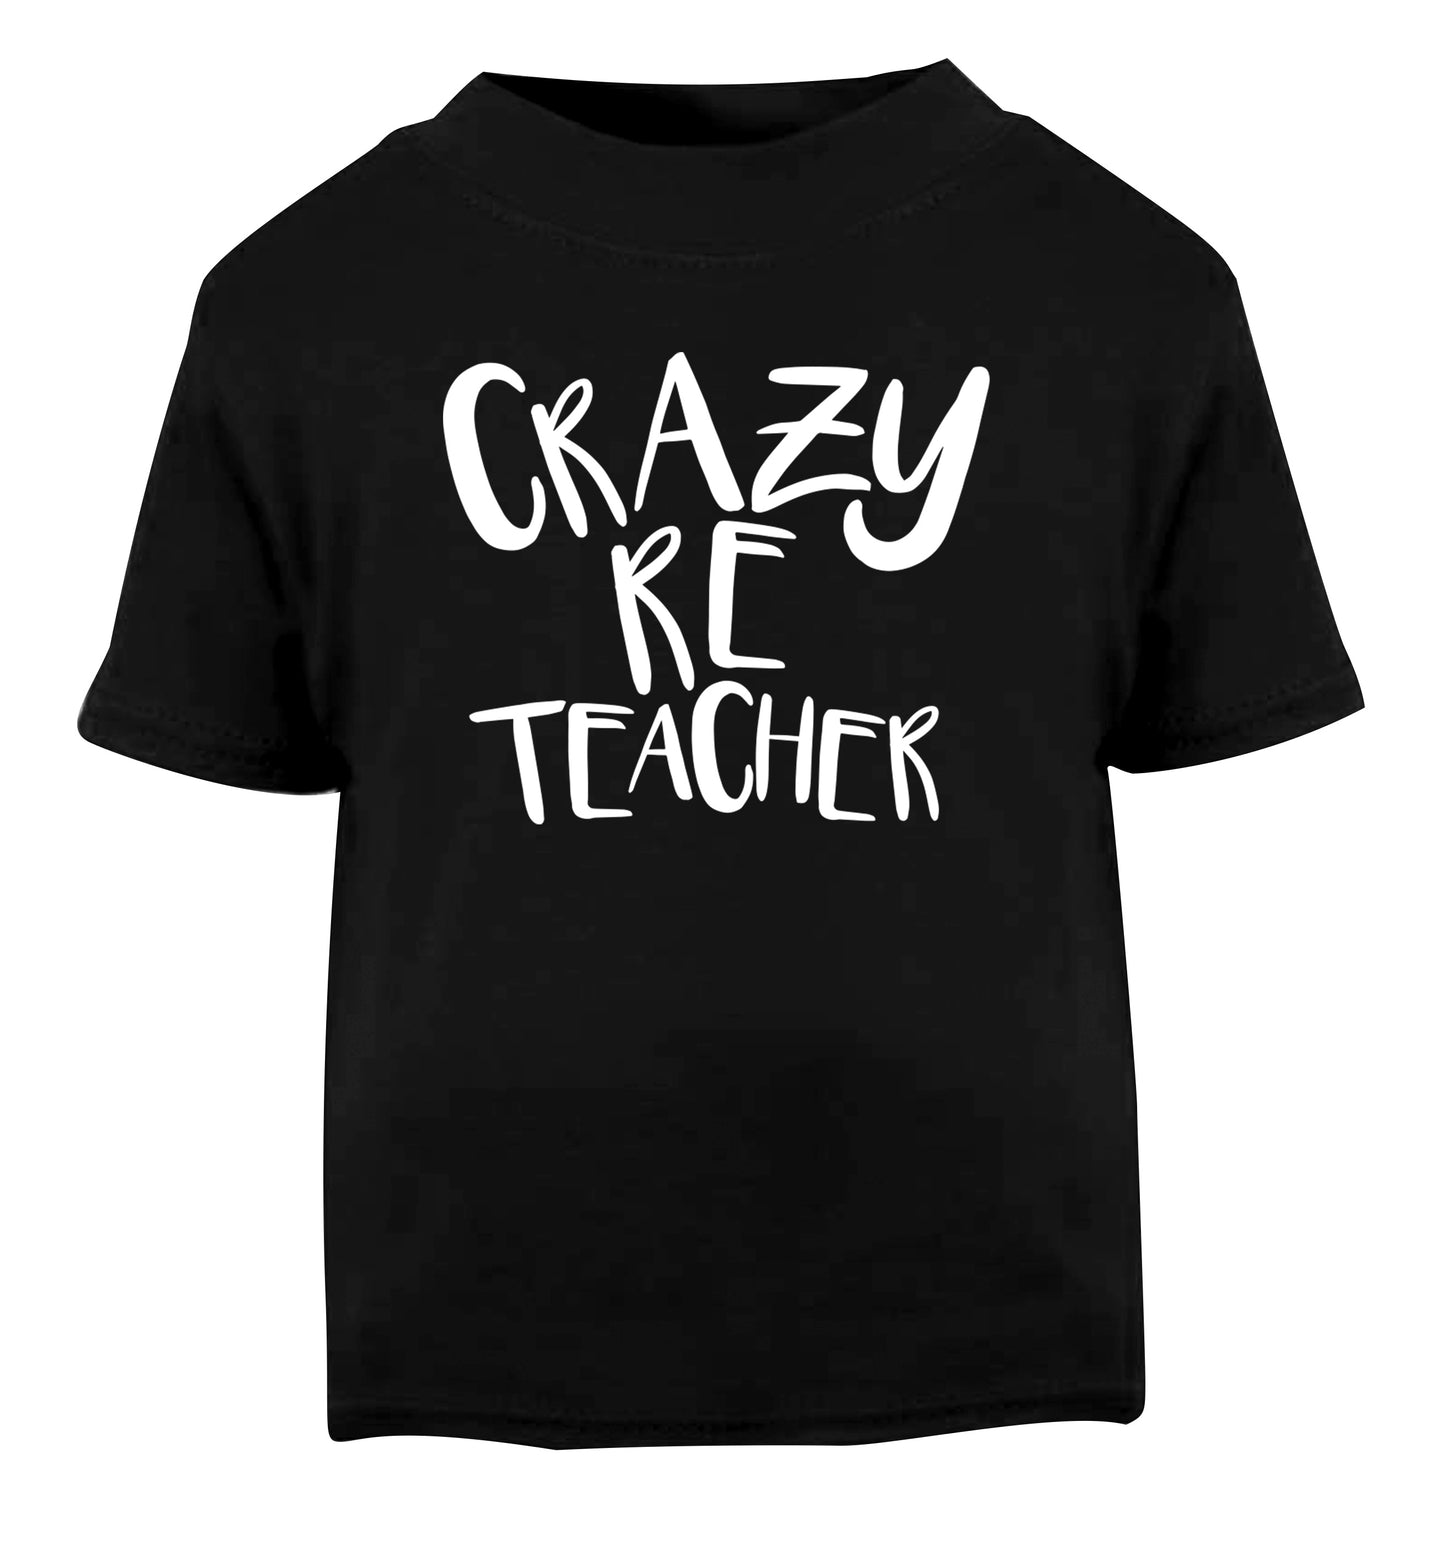 Crazy RE teacher Black Baby Toddler Tshirt 2 years